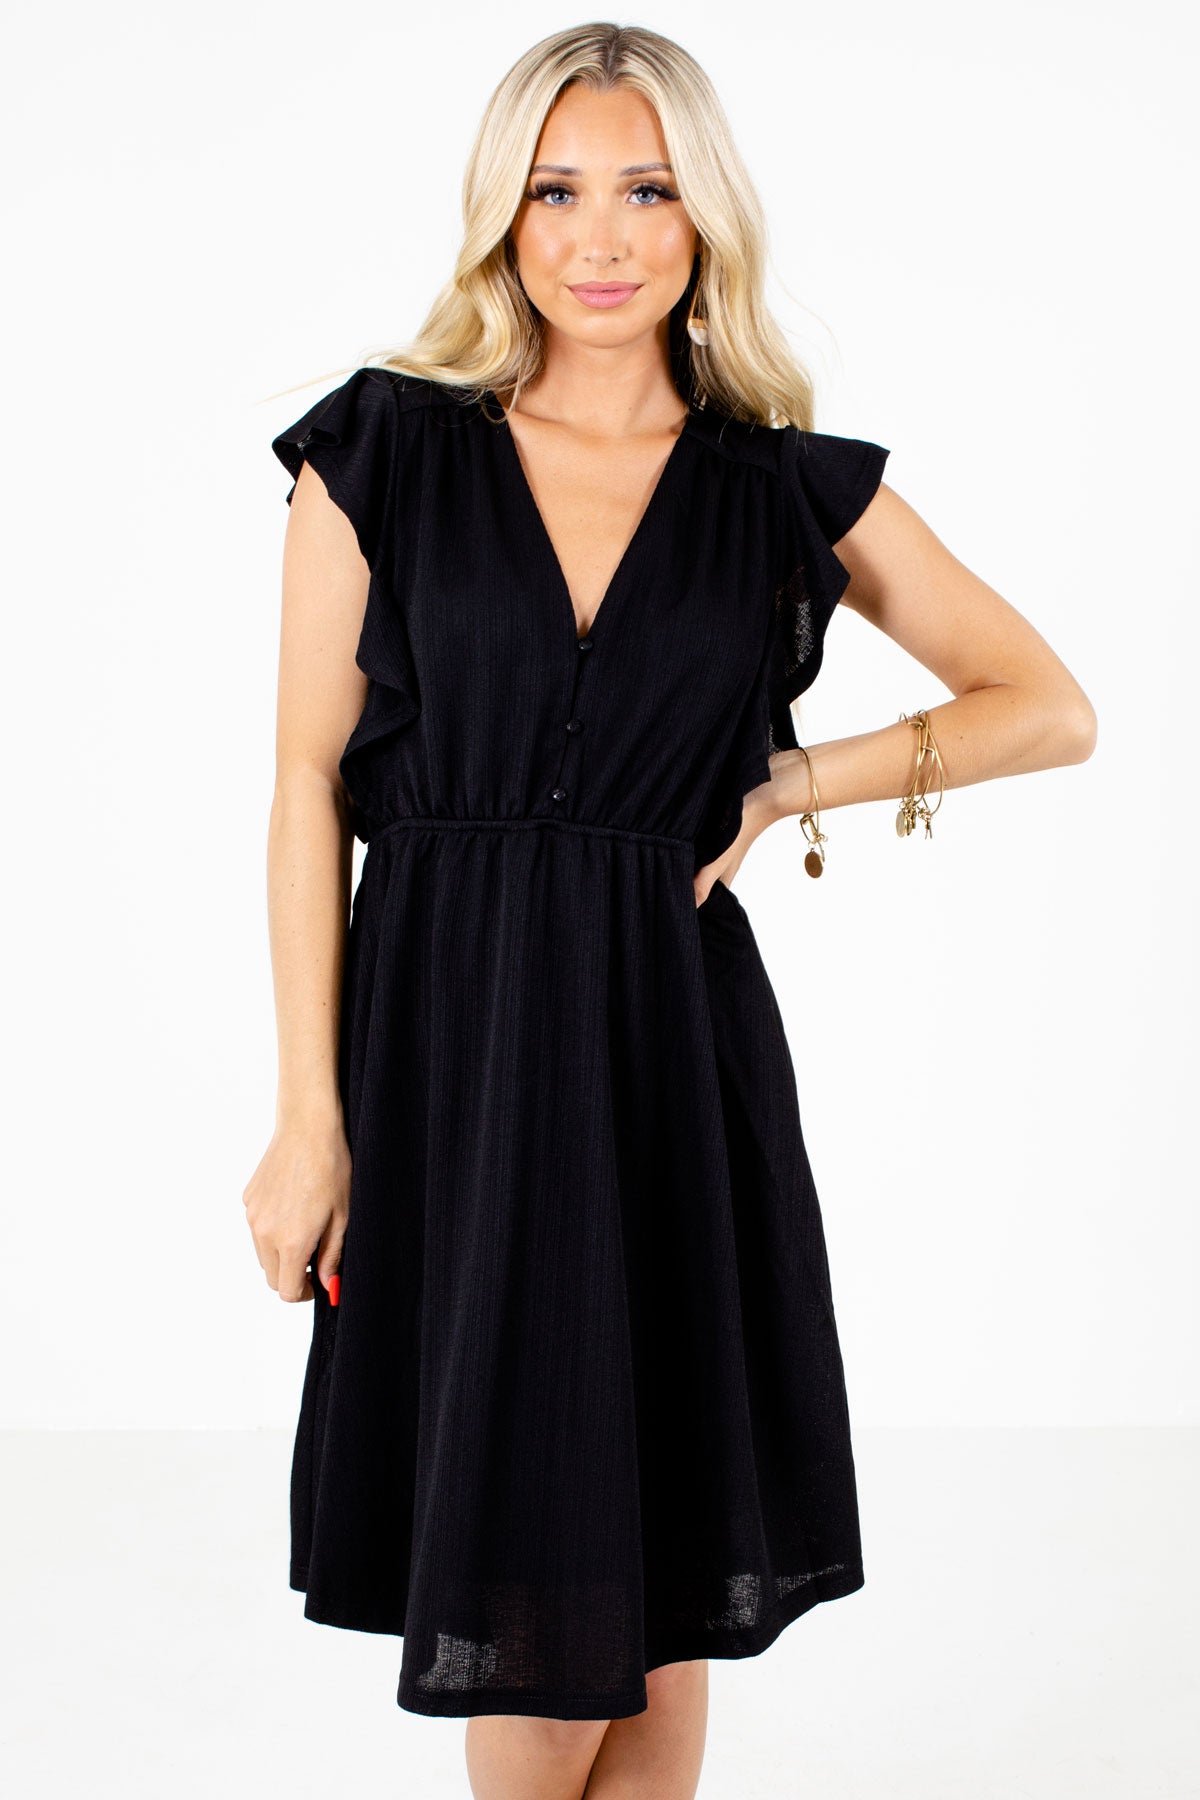 Black Ruffle Sleeve Boutique Mini Dresses for Women